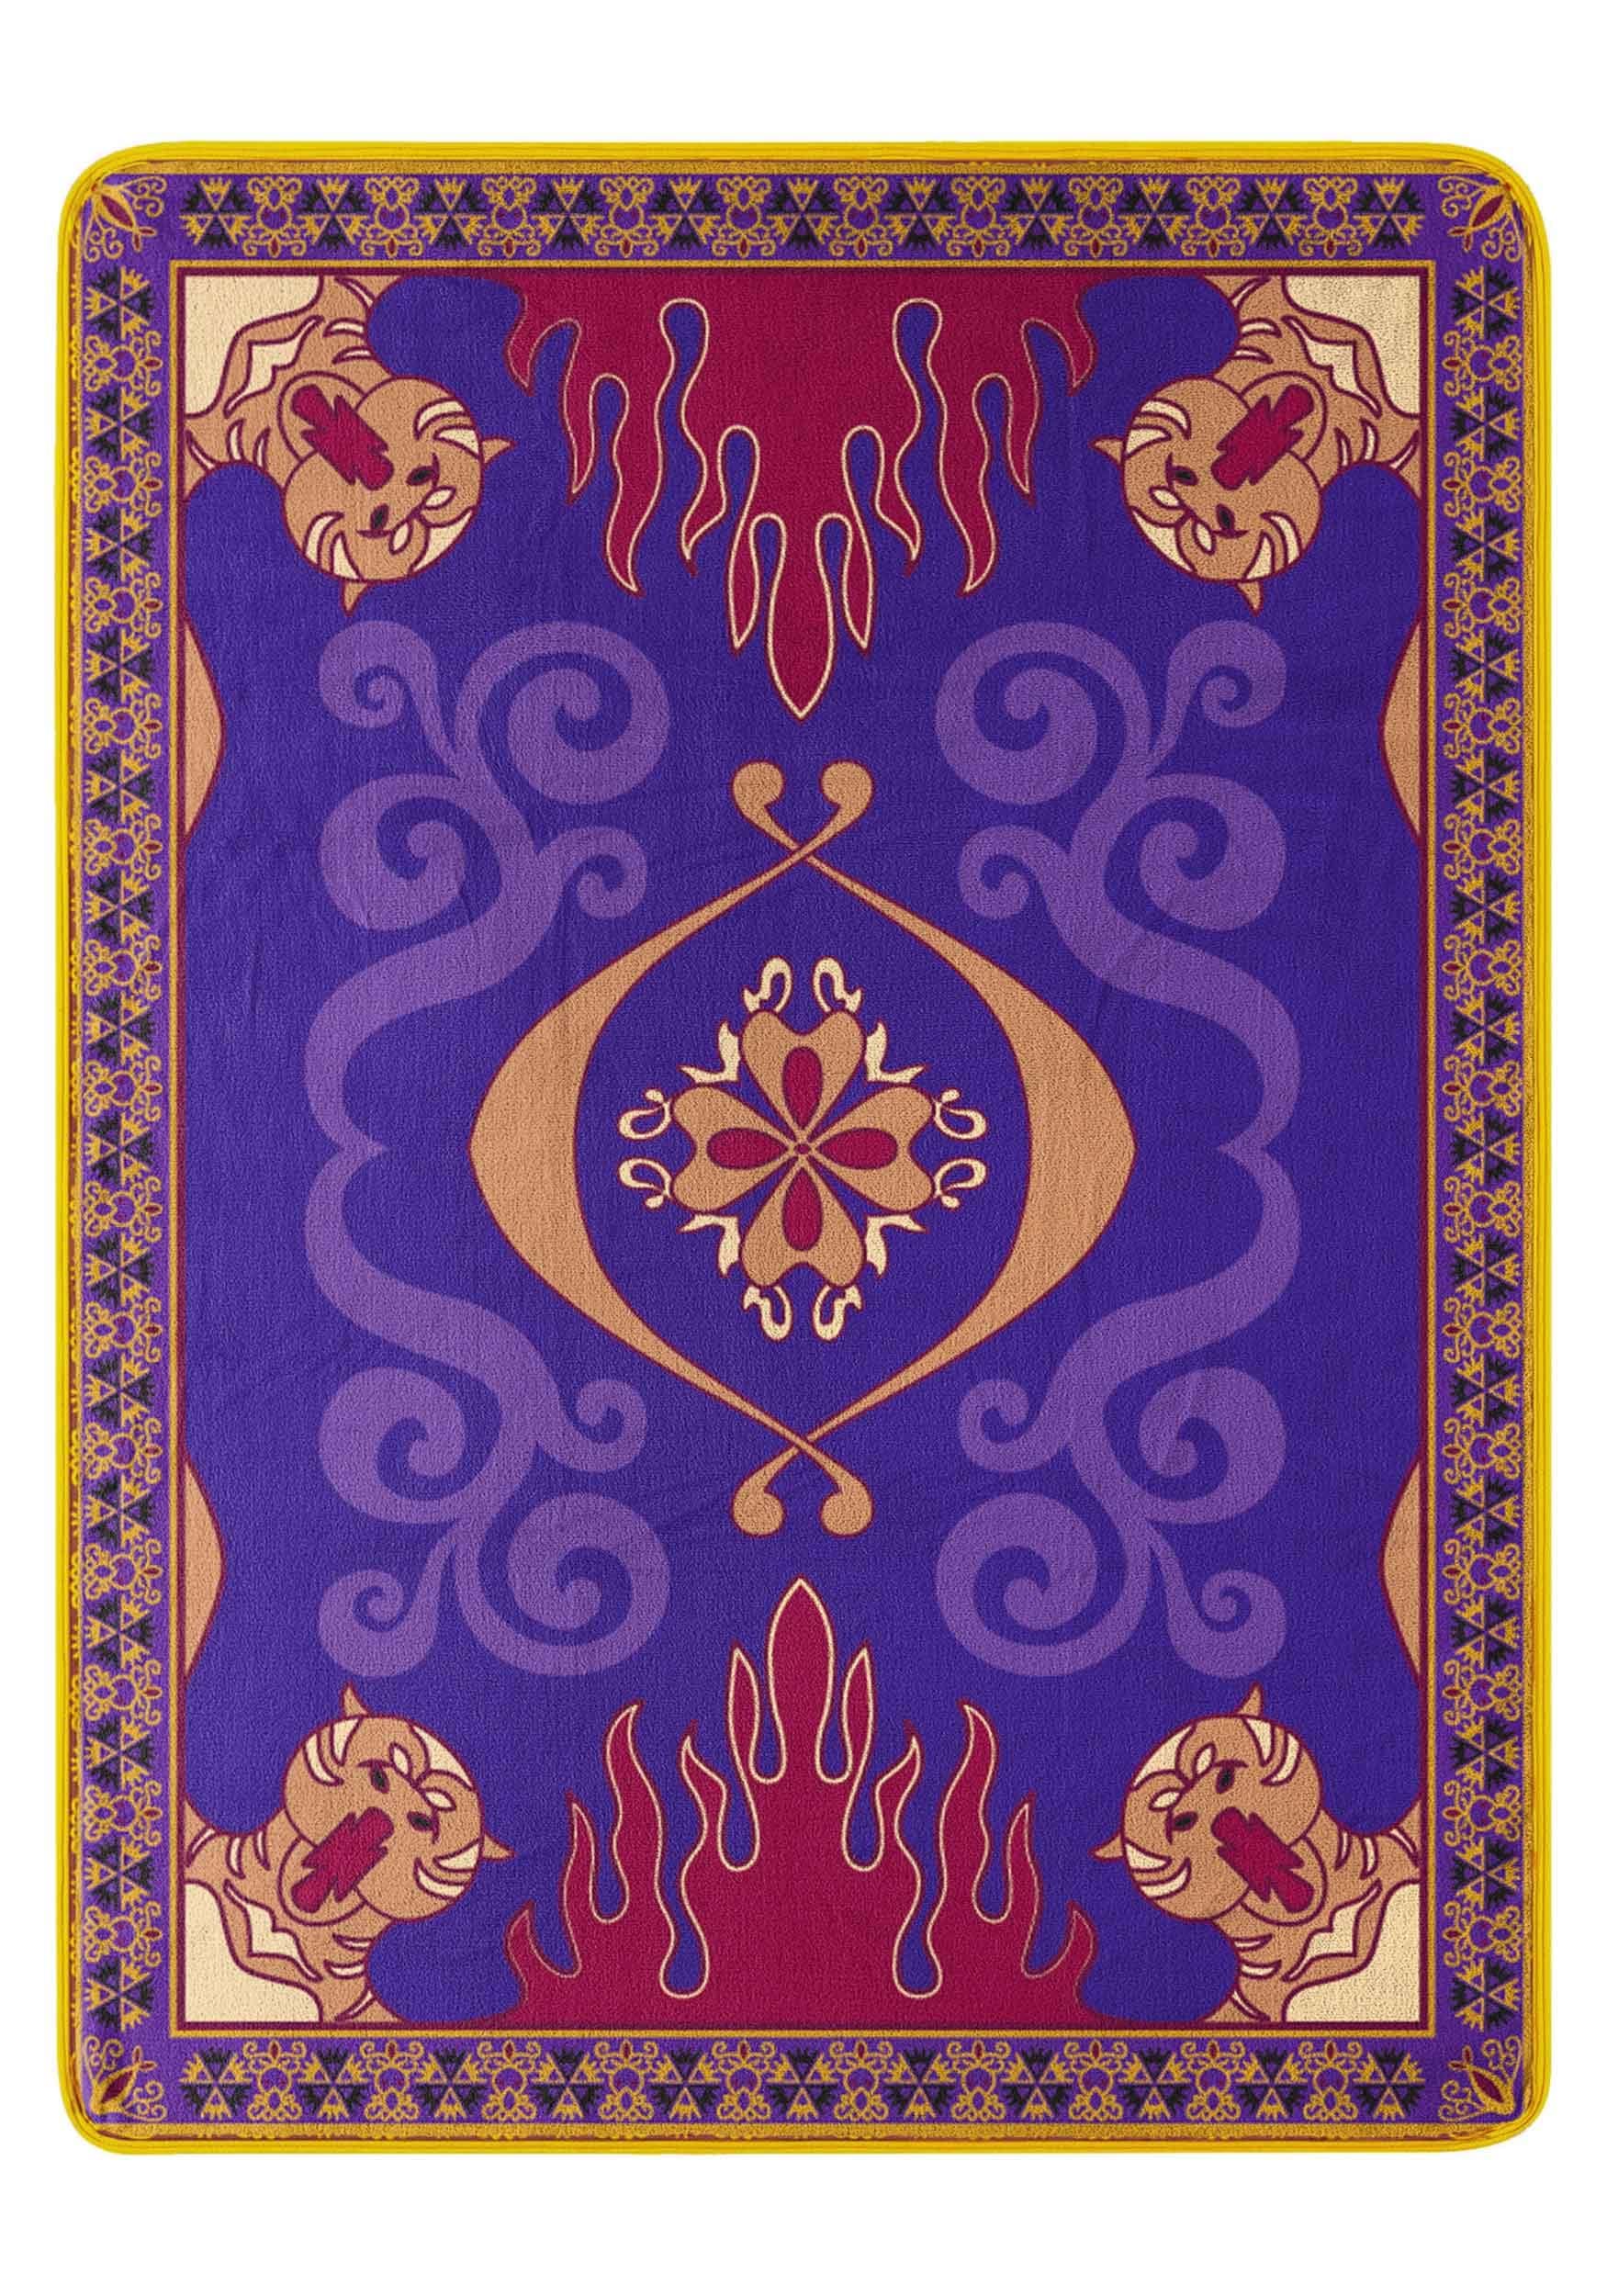 Aladdin Magic Carpet Micro Raschel Blanket | Disney Home and Decor